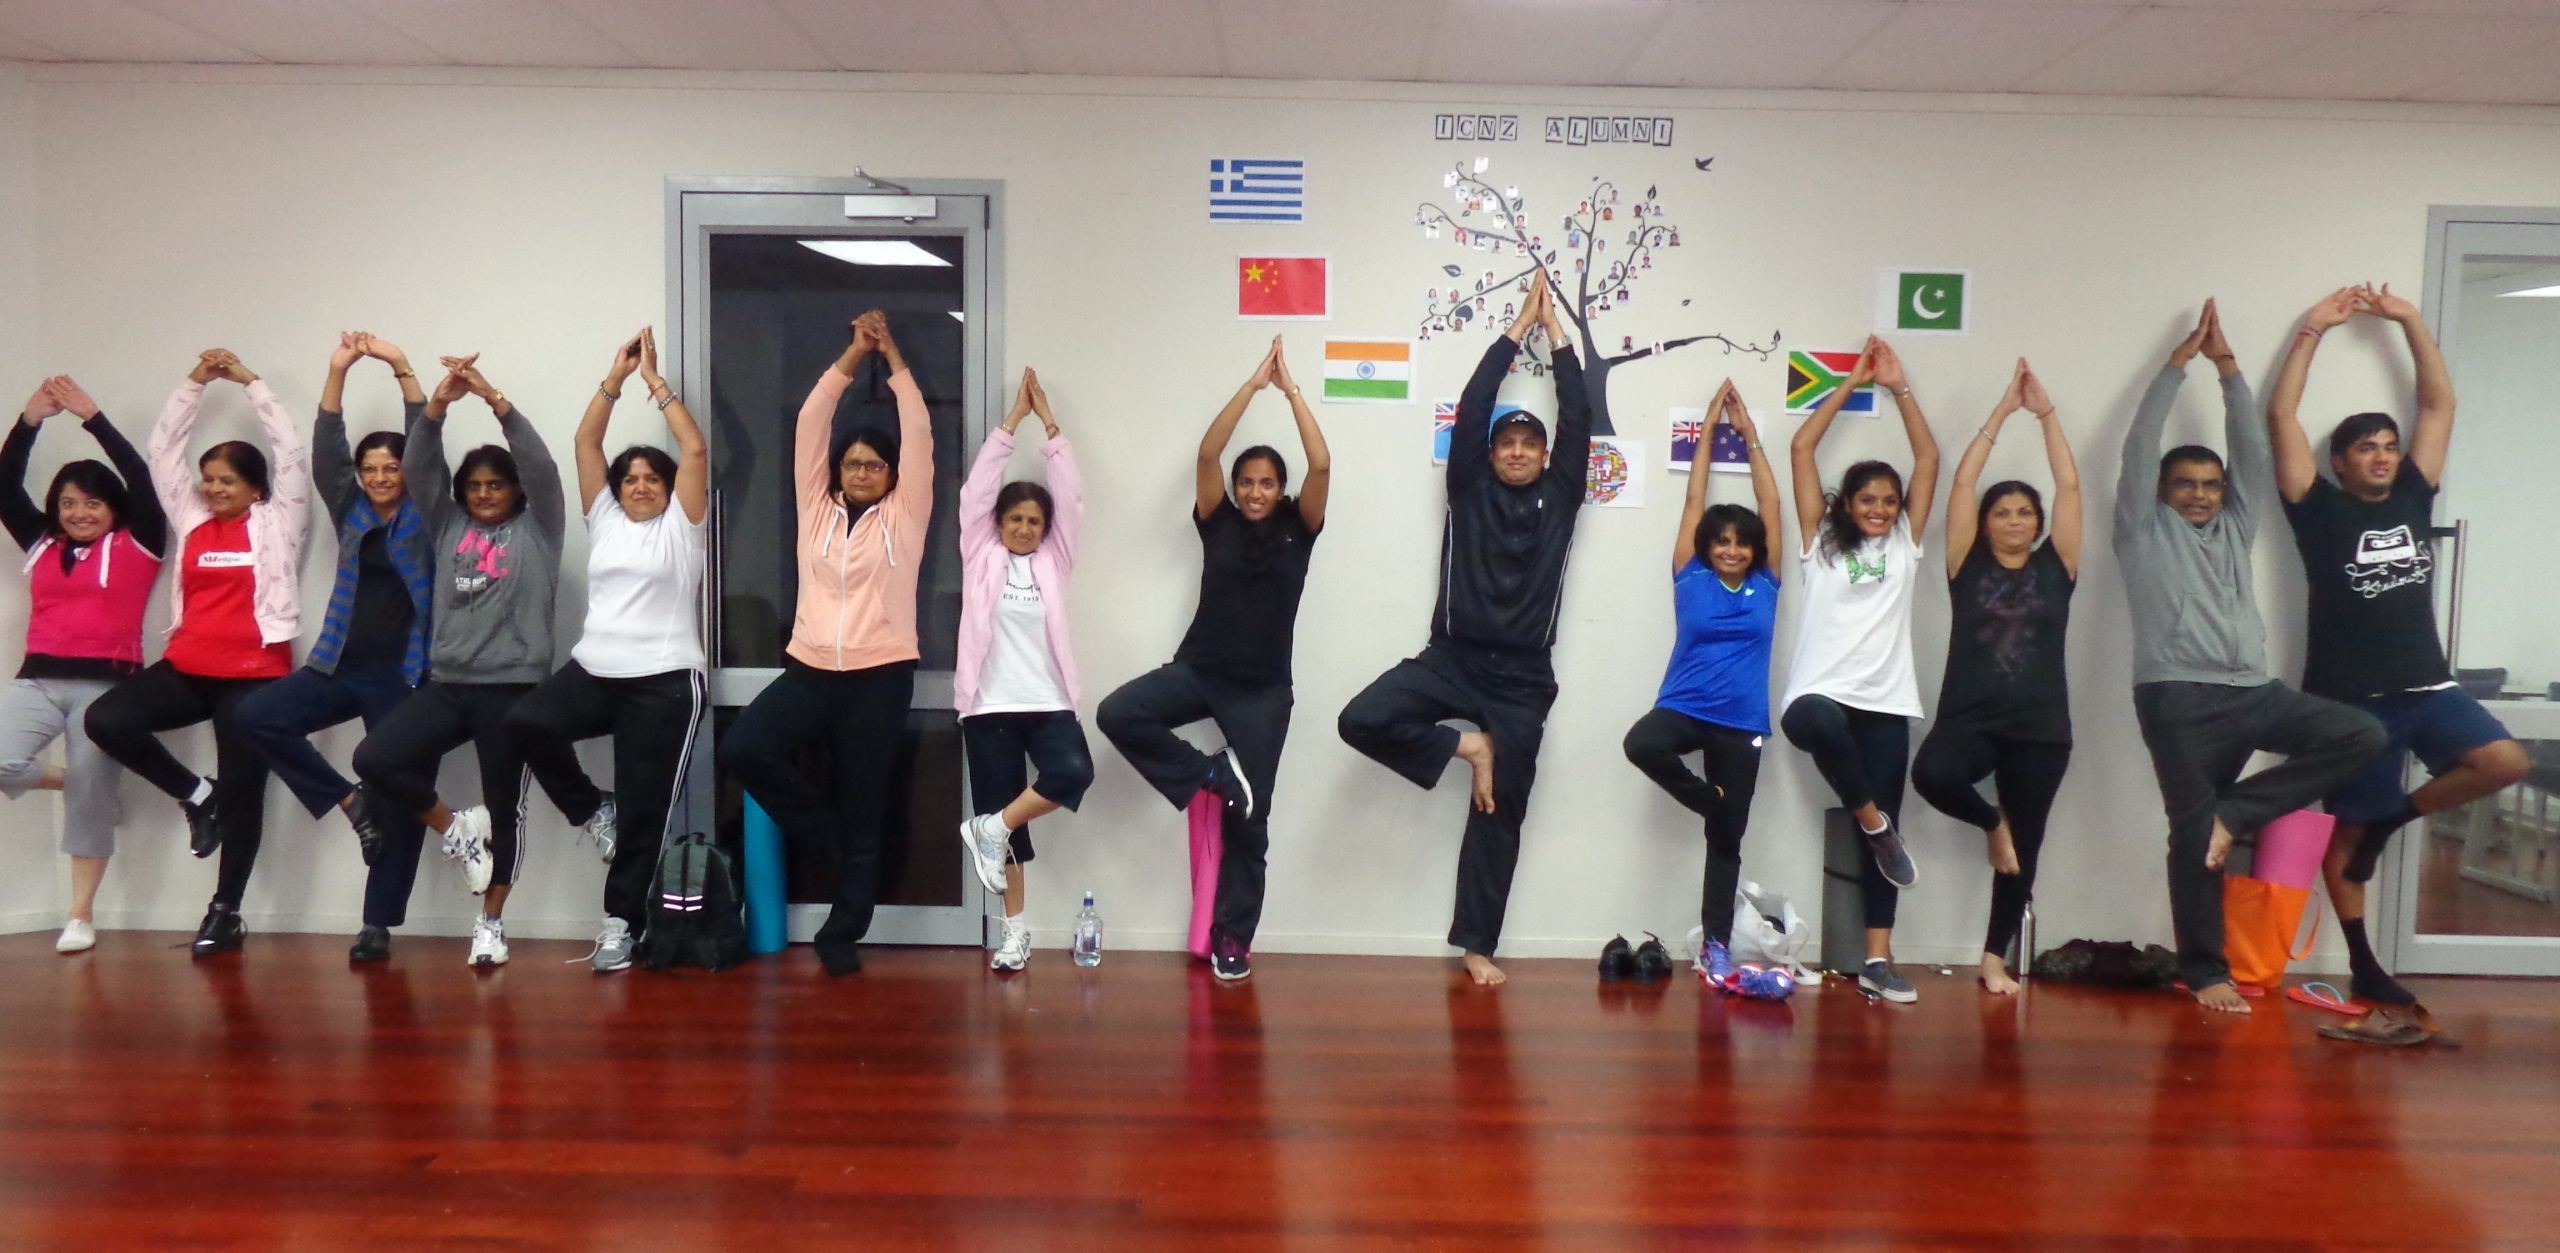 1-Yoga-Workshops-by-Ashish-in-NZ-scaled.jpg